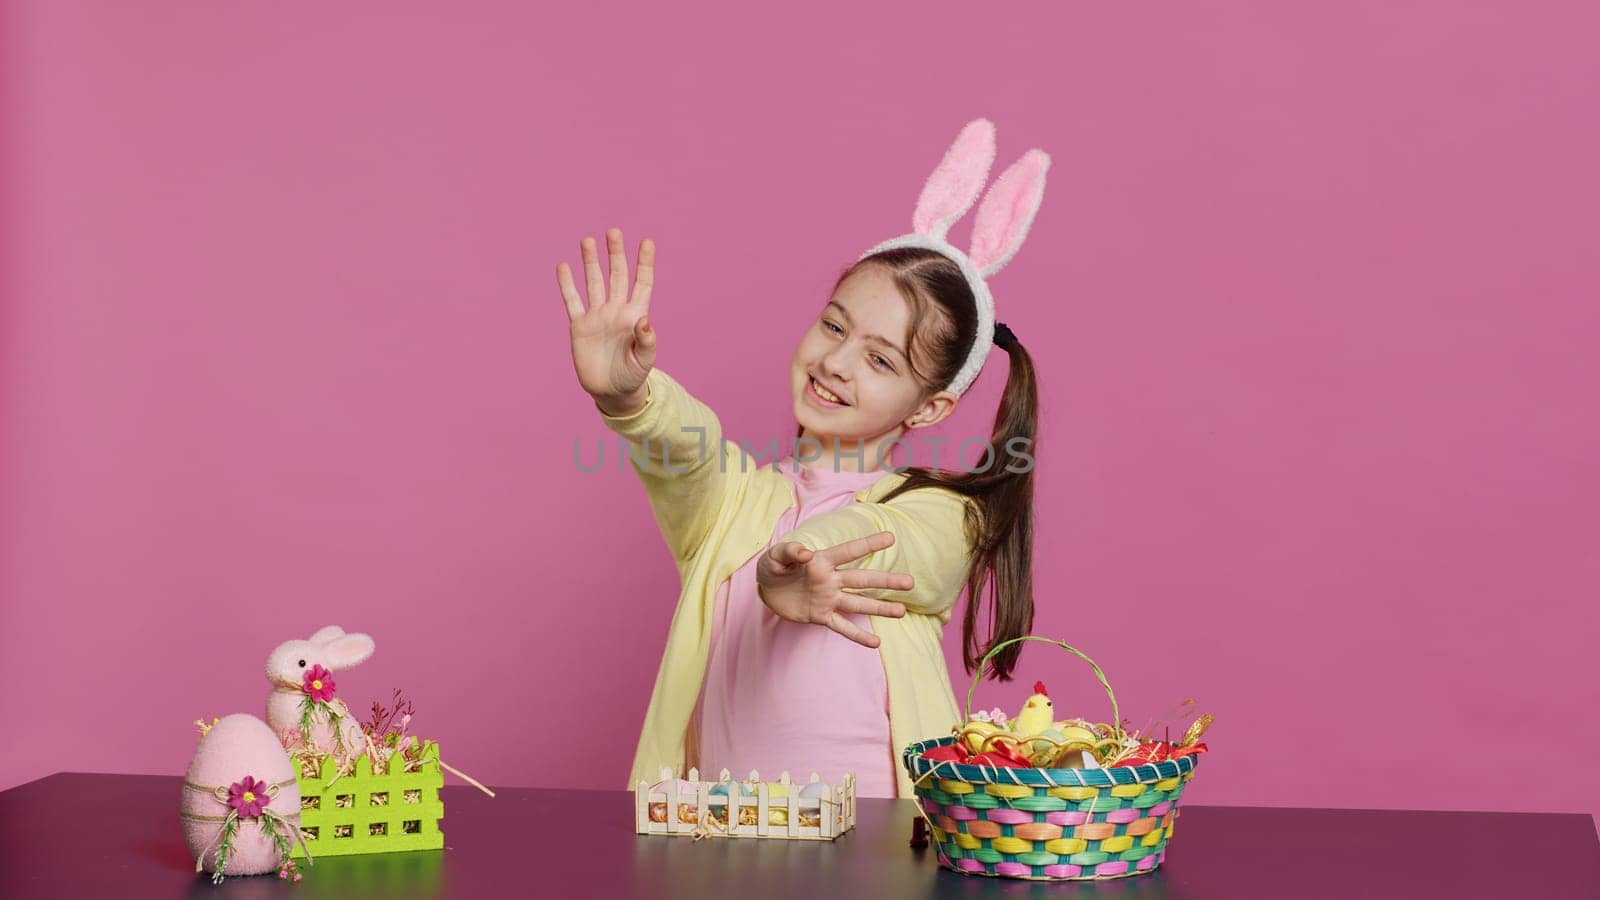 Energetic young girl with adorable bunny ears waving in studio by DCStudio